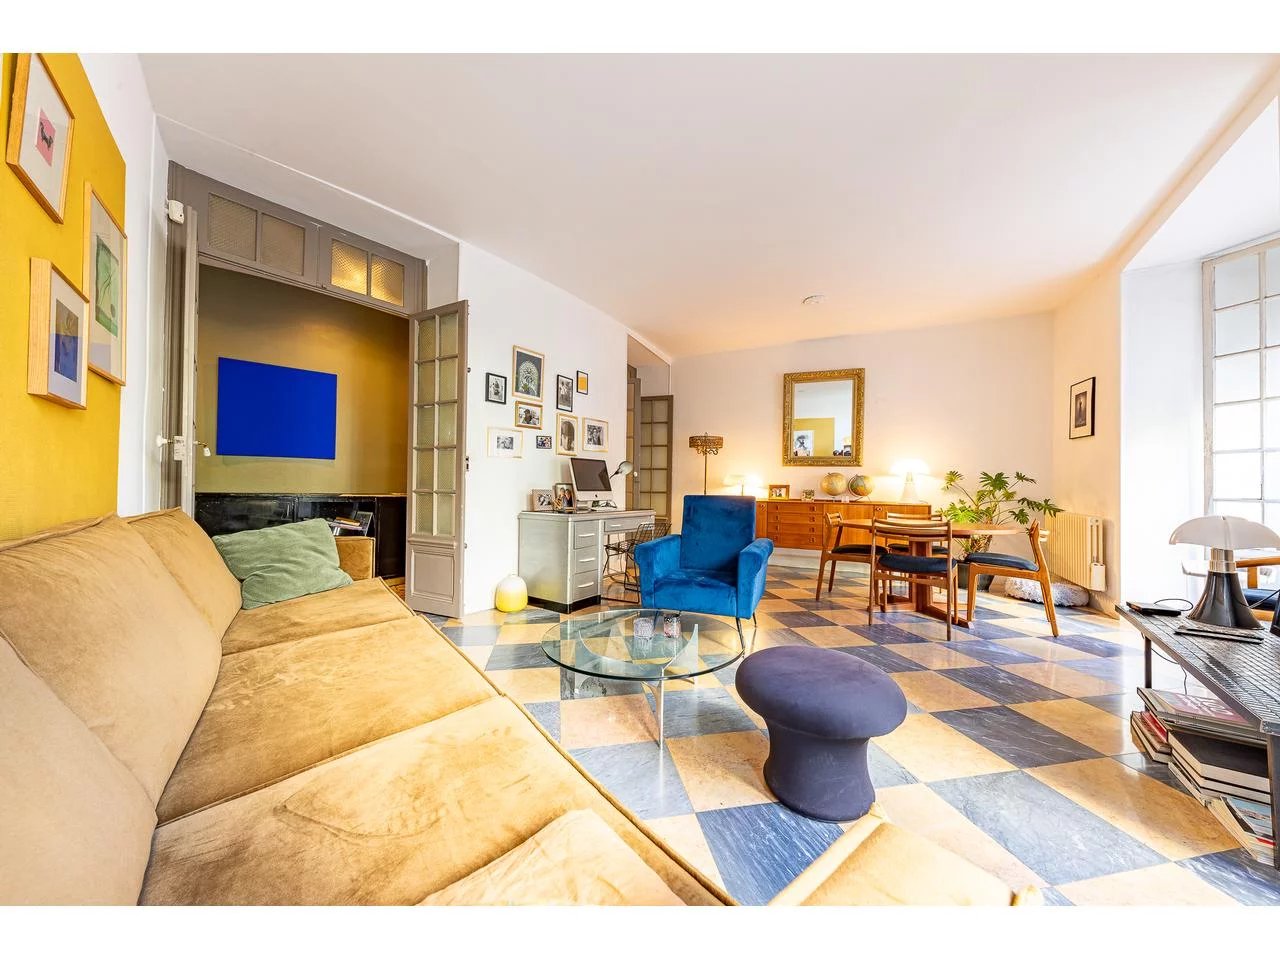 Appartement  4 Locali 77.12m2  In vendita   359 000 €